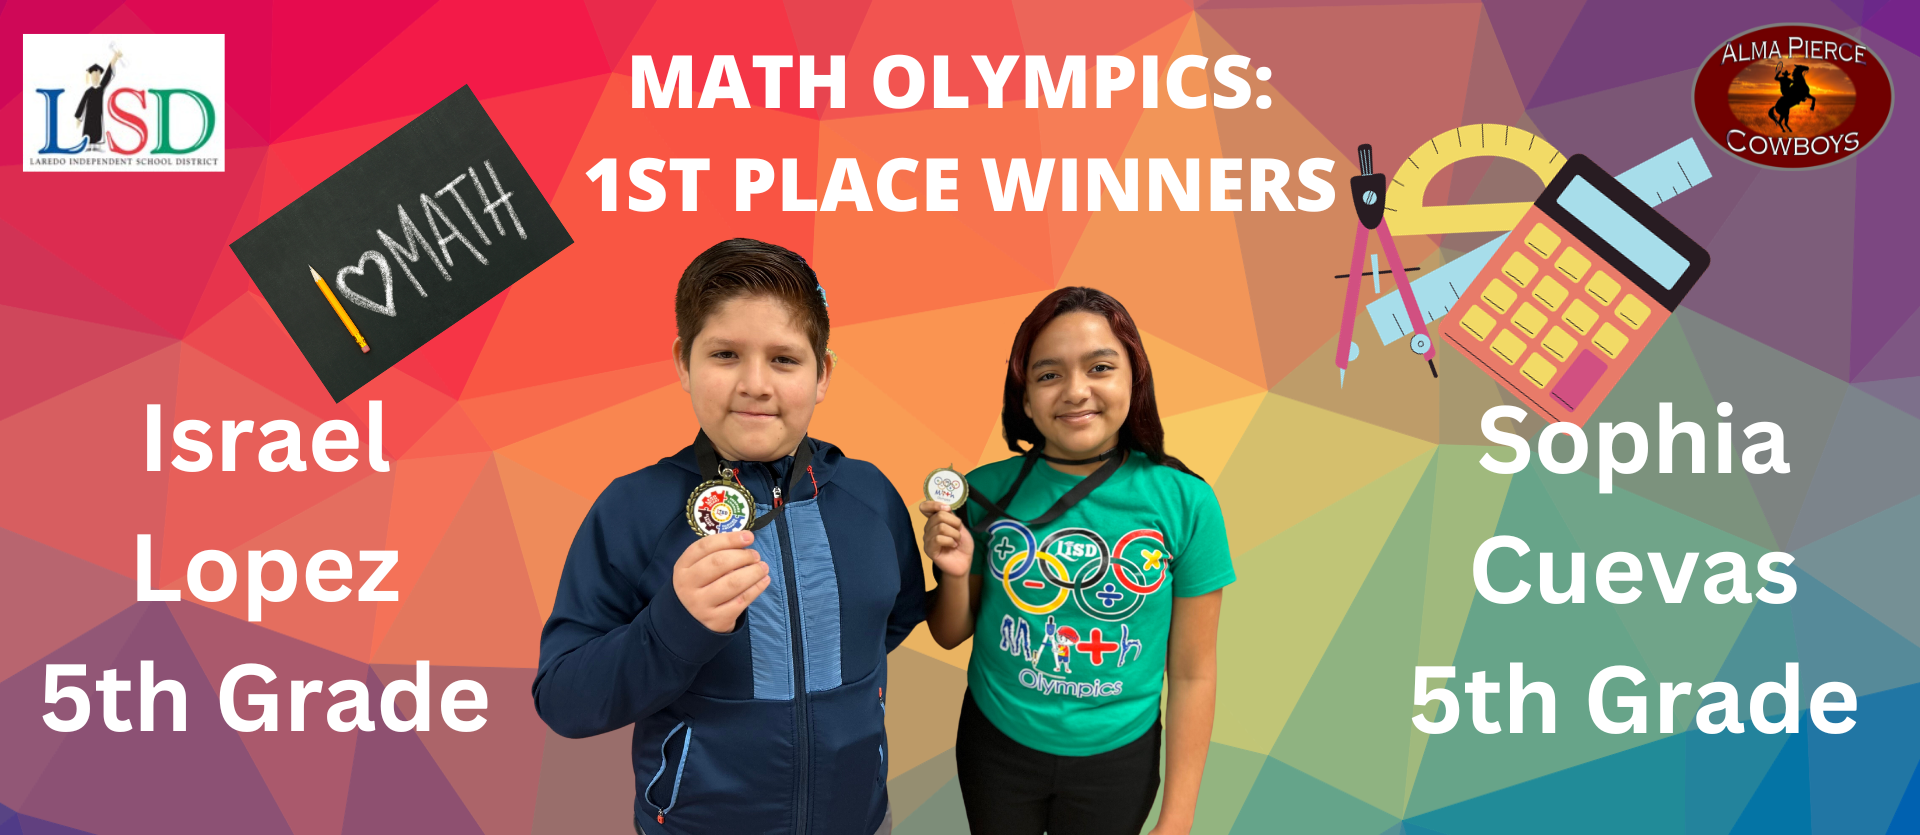 Math Olympics 5th Grade 1st Place Winners: Sophia Cuevas & Israel Lopez